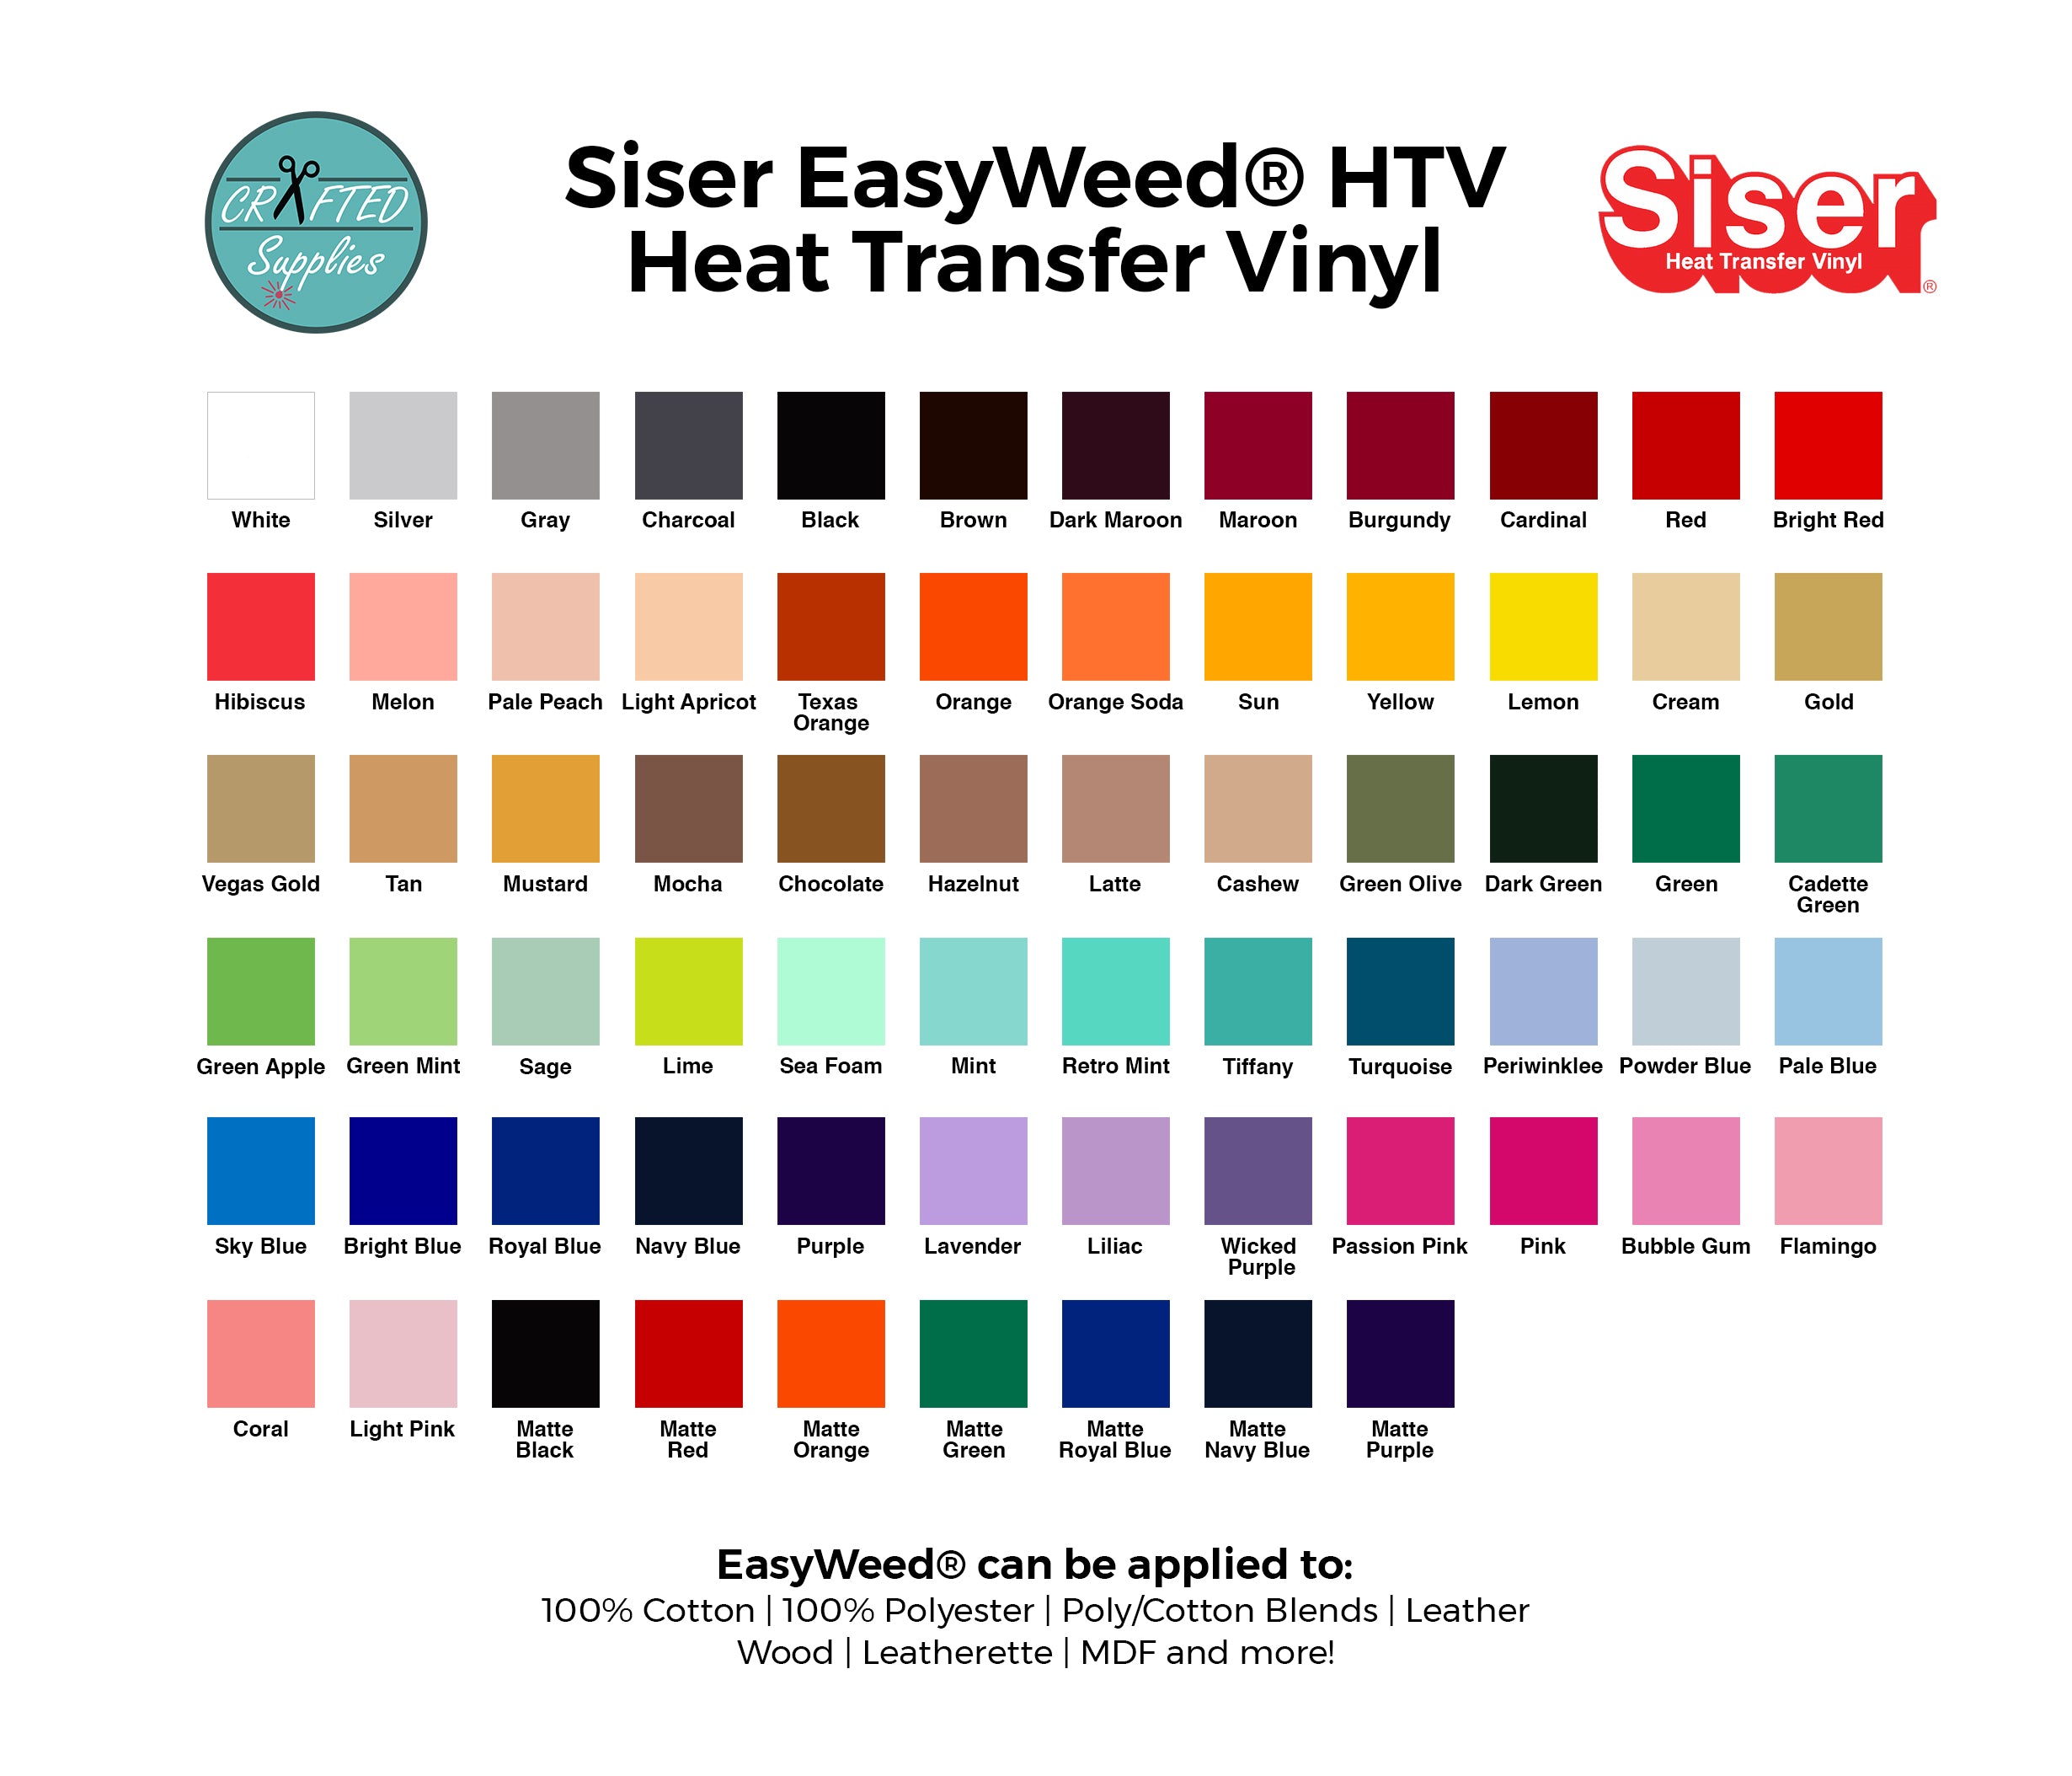 Siser EasyWeed HTV Vinyl - Bubble Gum Pink